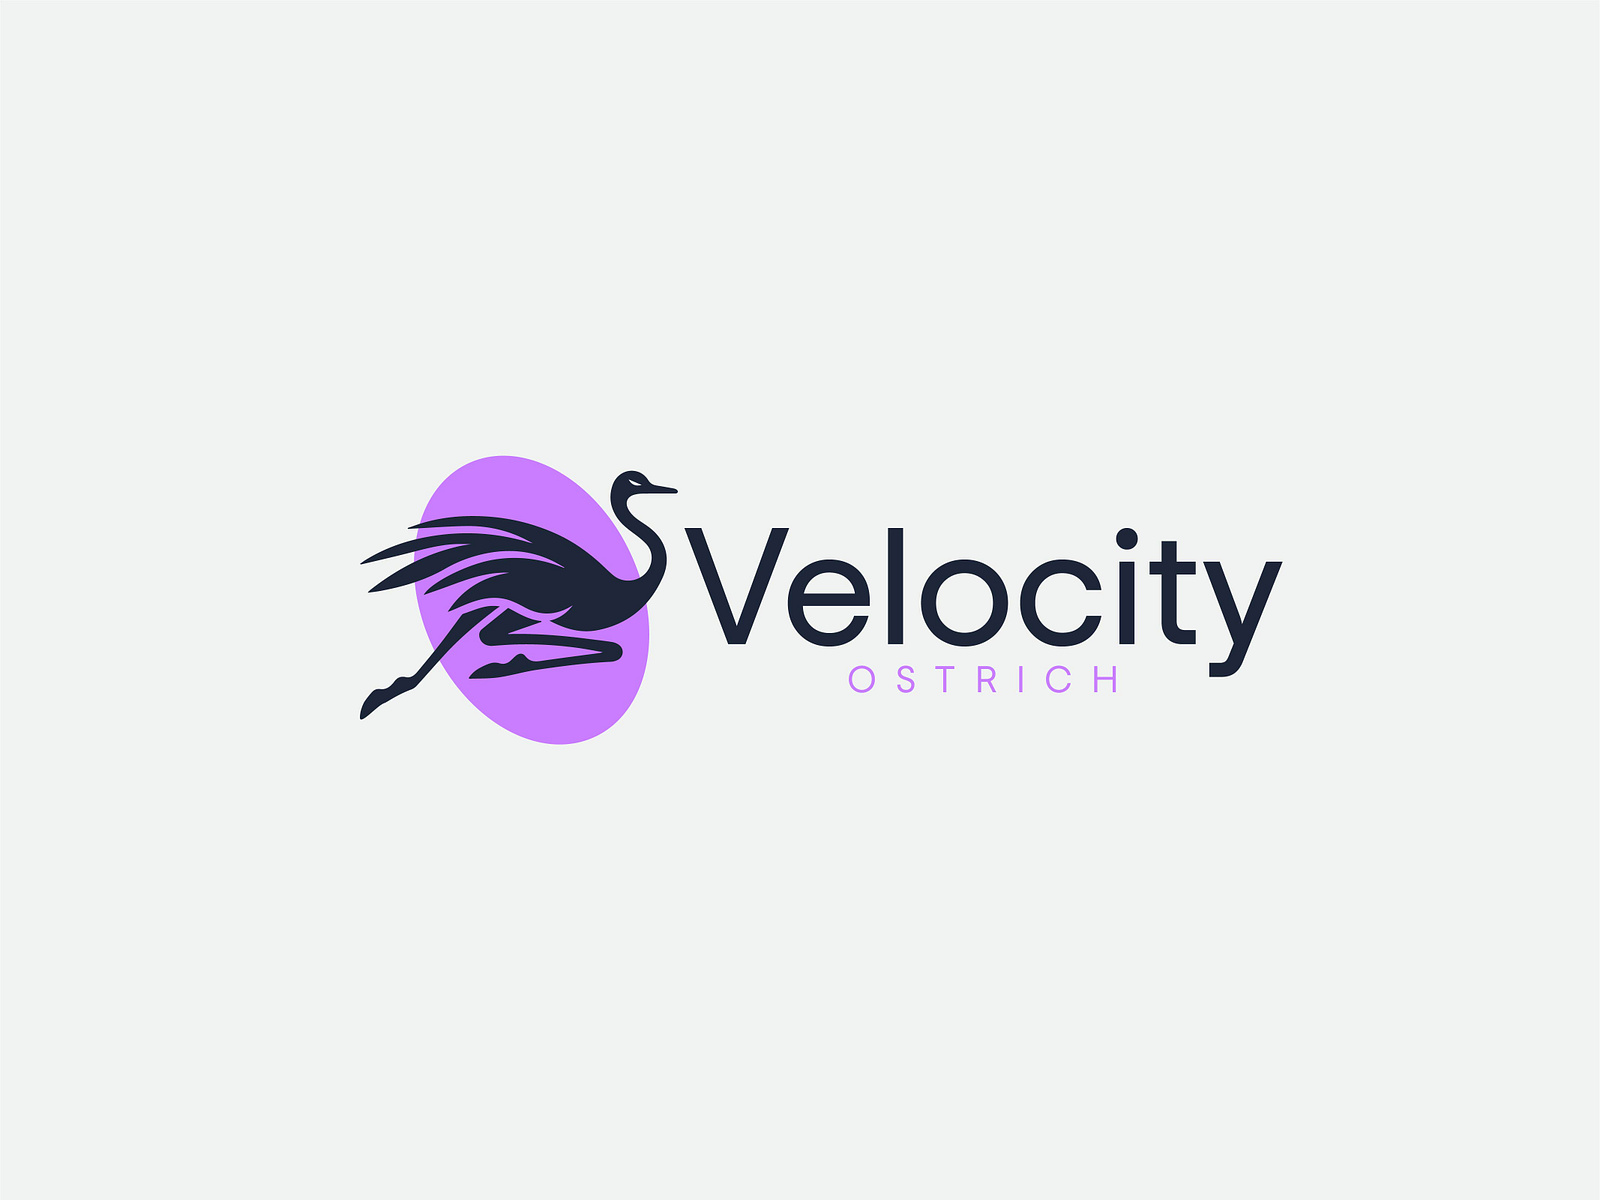 velocity technology solutions logo